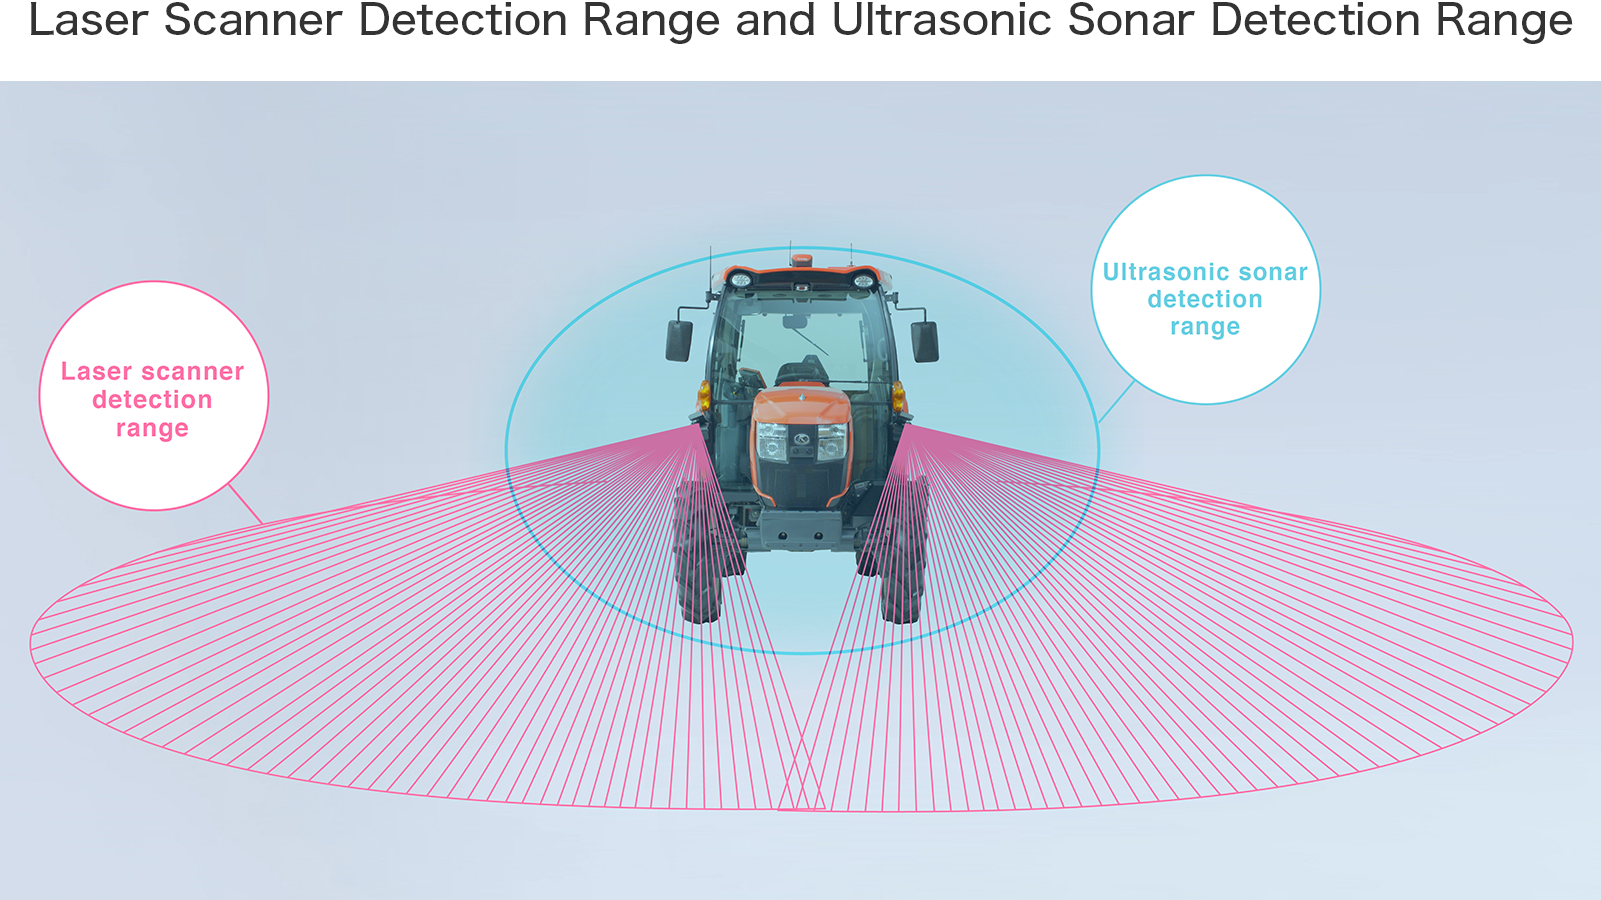 Laser Scanner Detection Range and Ultrasonic Sonar Detection Range